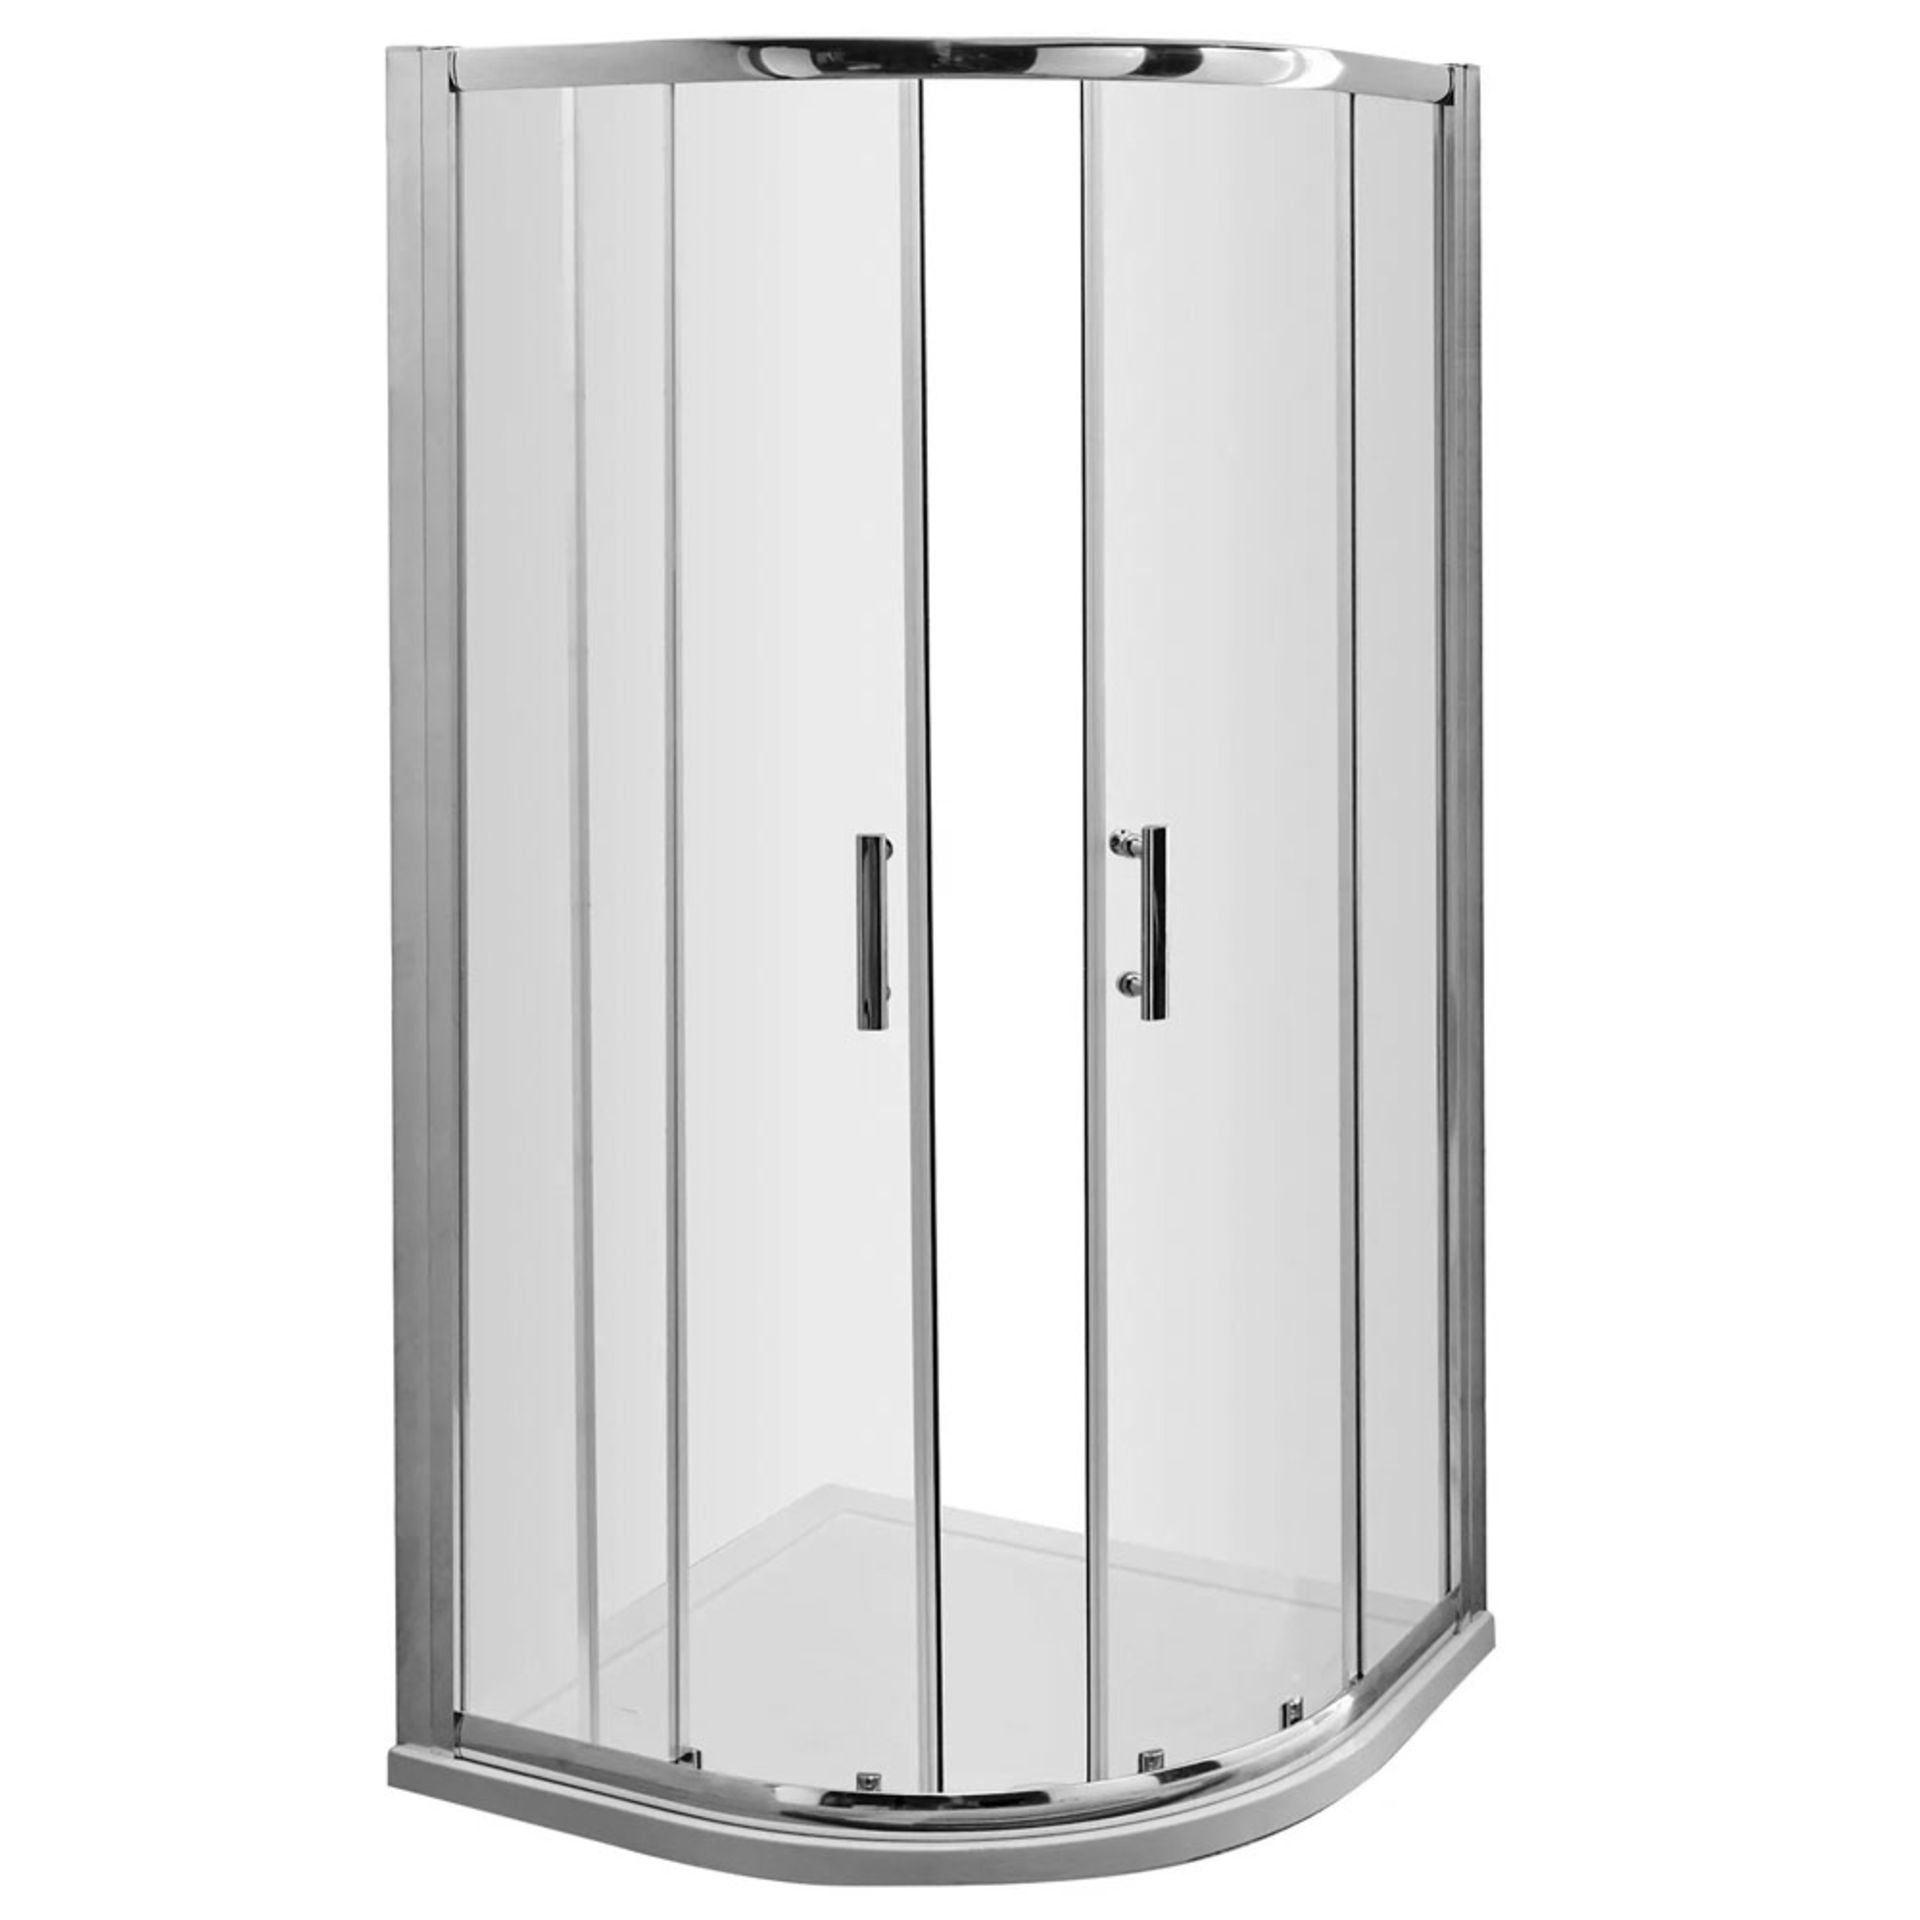 NEW & BOXED Twyfords 800x800mm - Premium EasyClean Sliding Door Quadrant Shower Enclosure.RRP £499. - Image 2 of 2